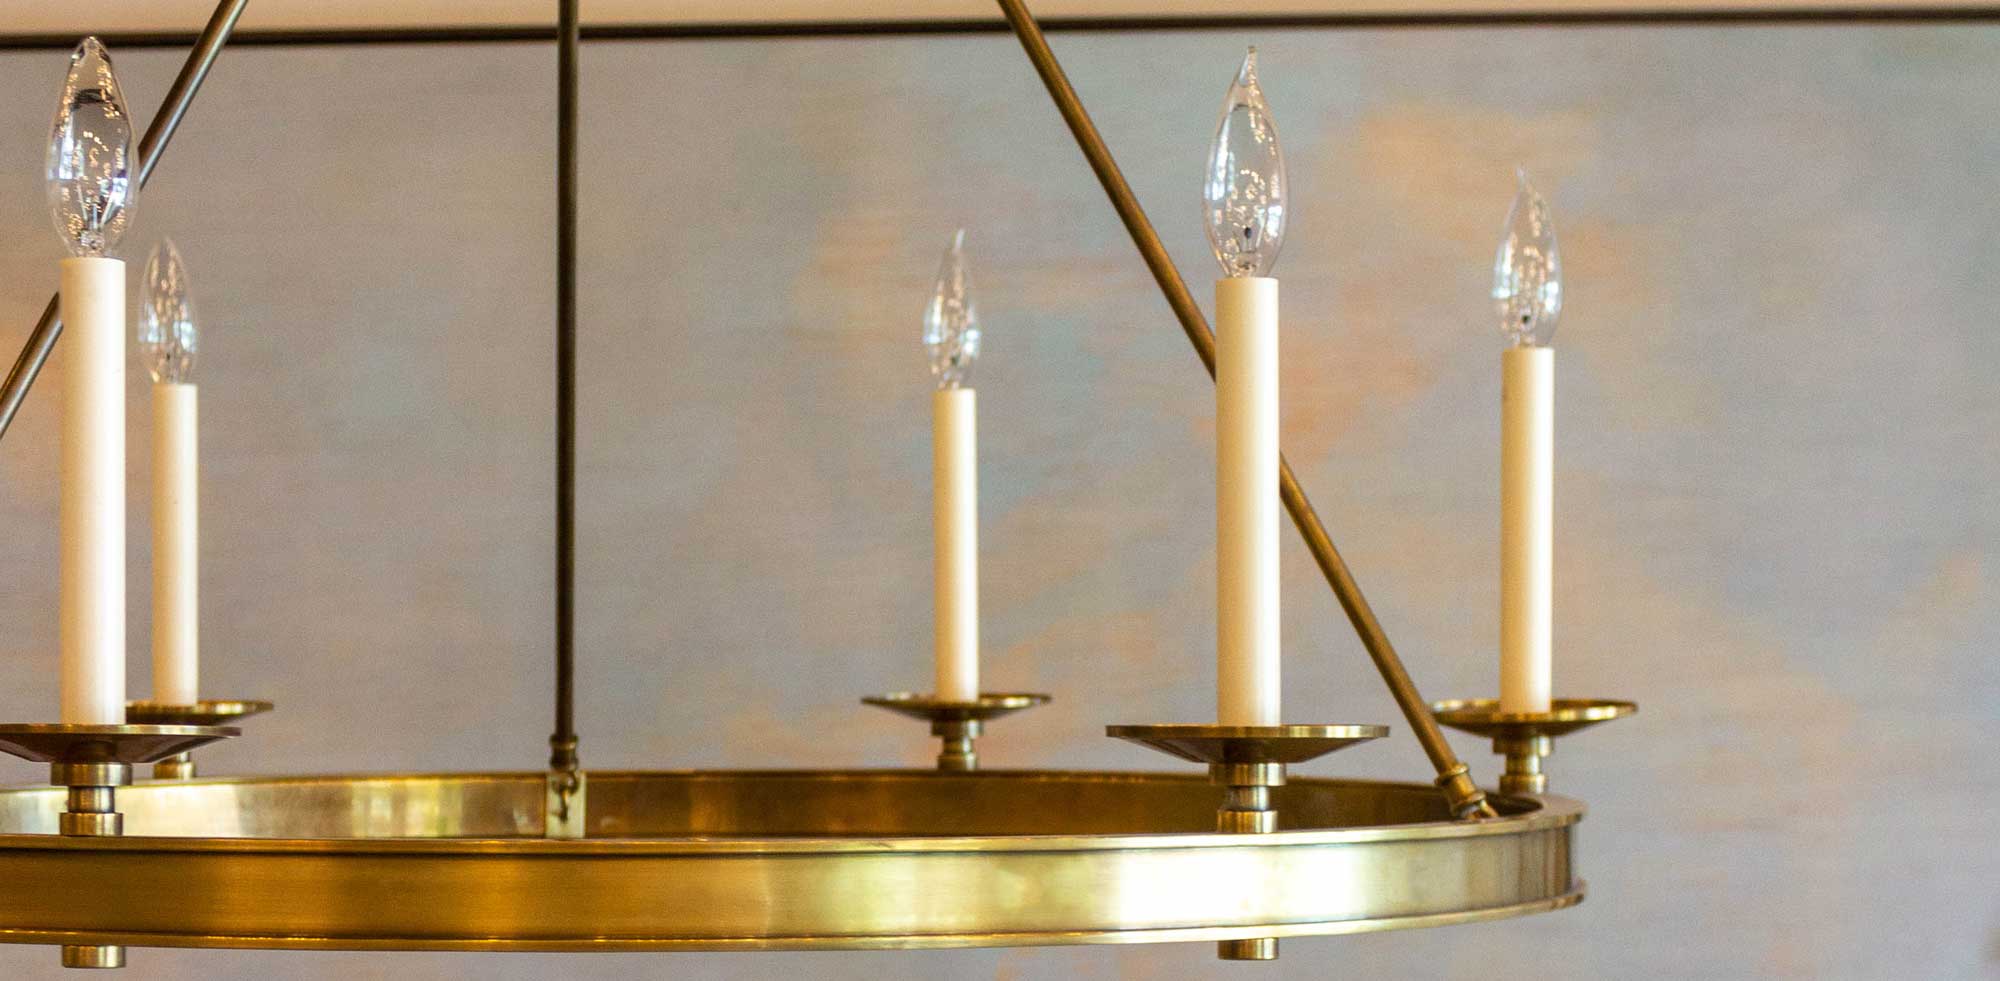 gold chandelier fall 2020 interior design trends